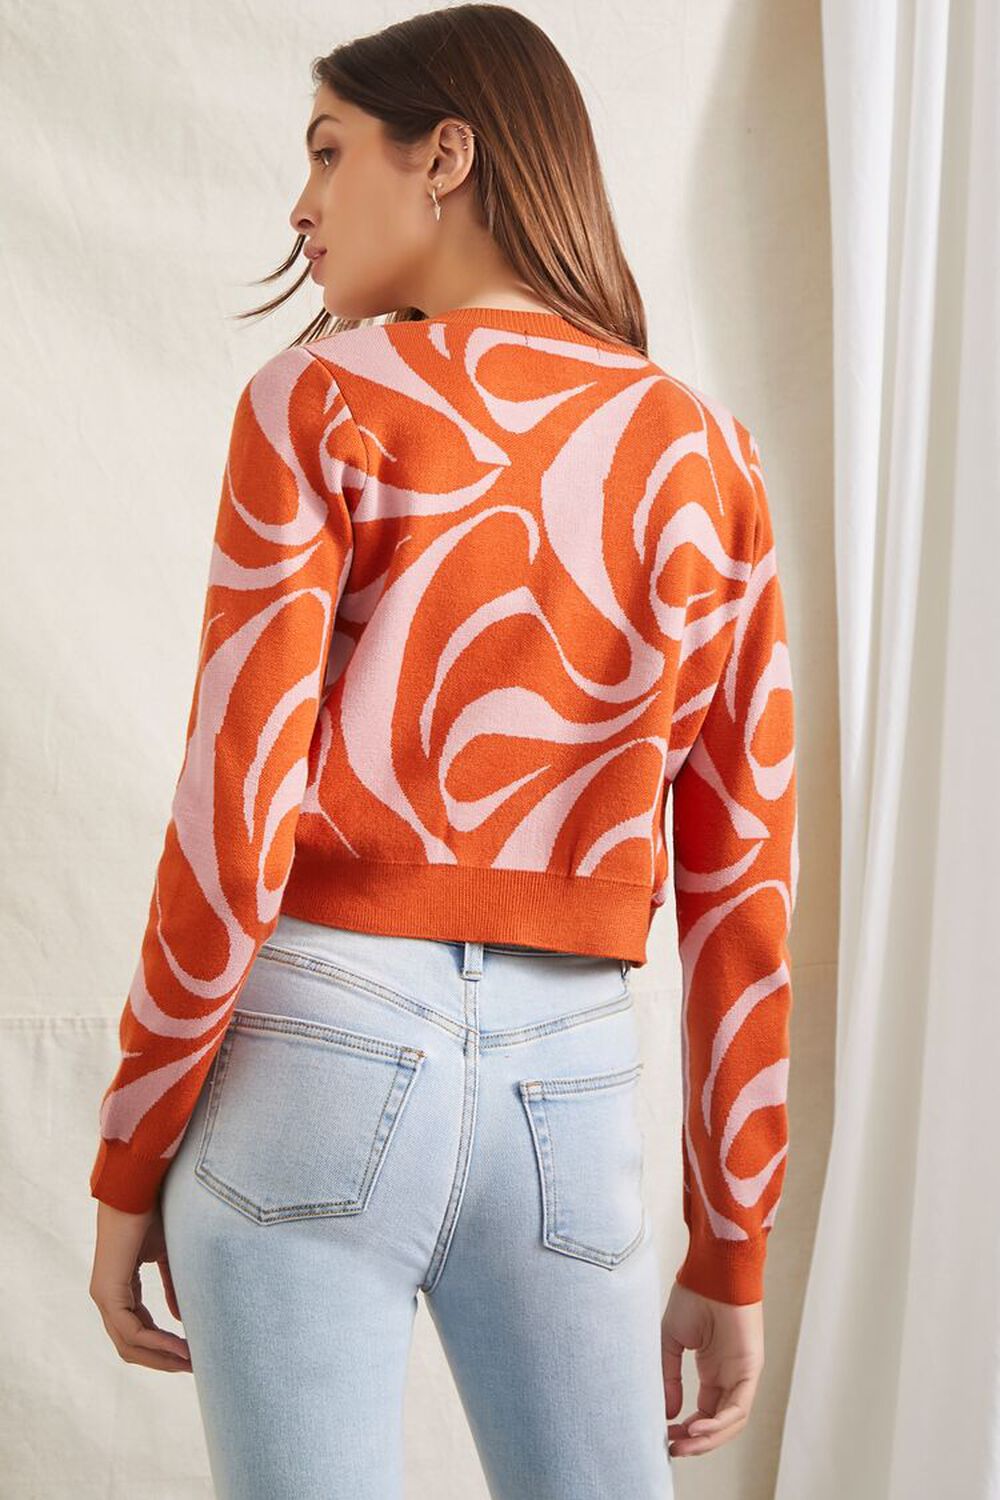 ORANGE/PINK Abstract Crop Top & Cardigan Sweater Set, image 3